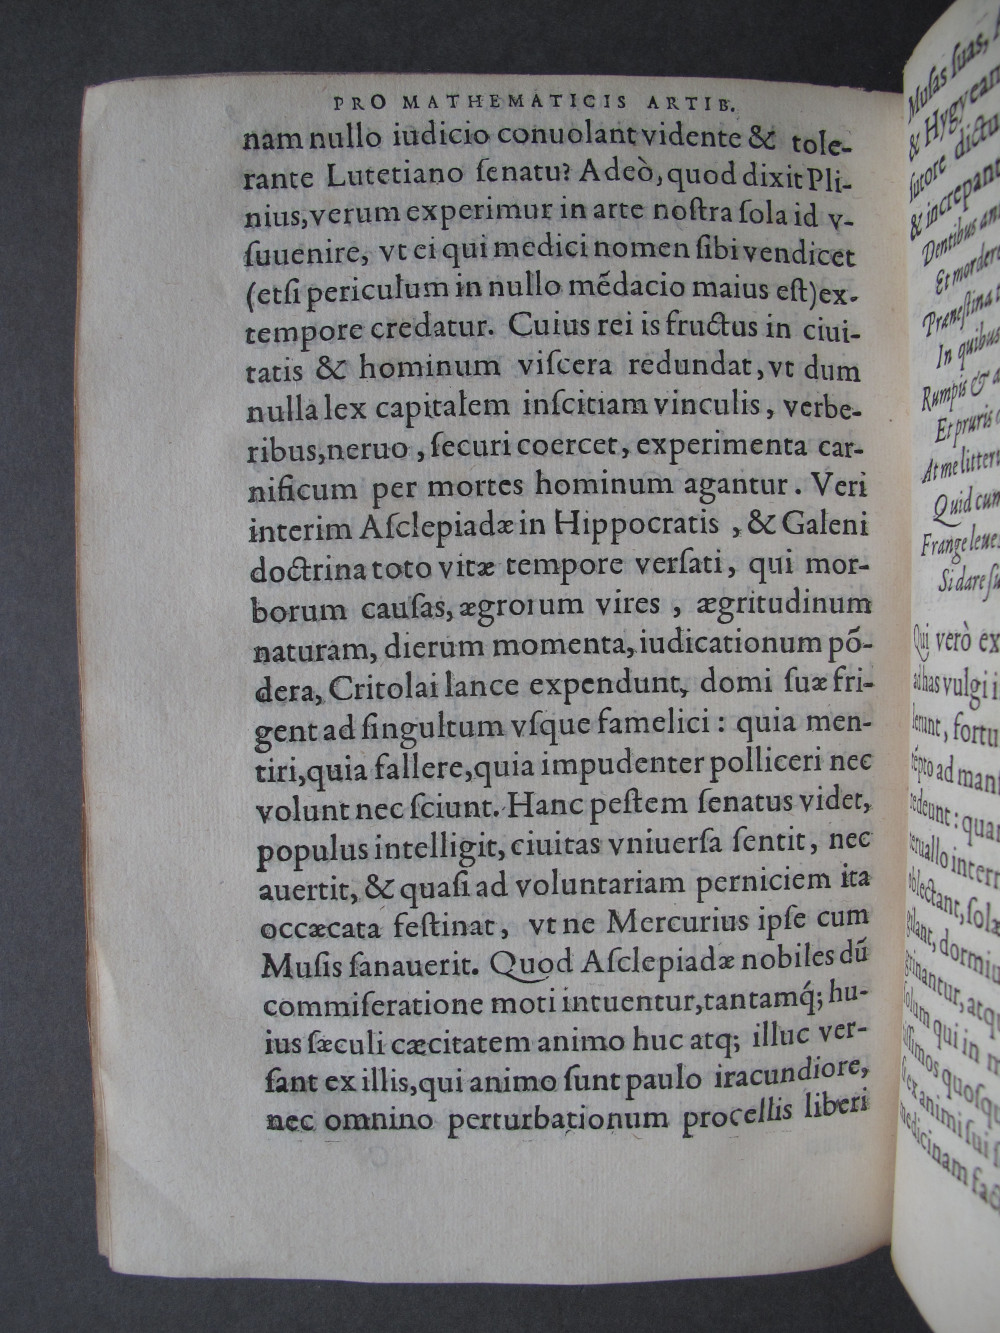 Folio 9 verso